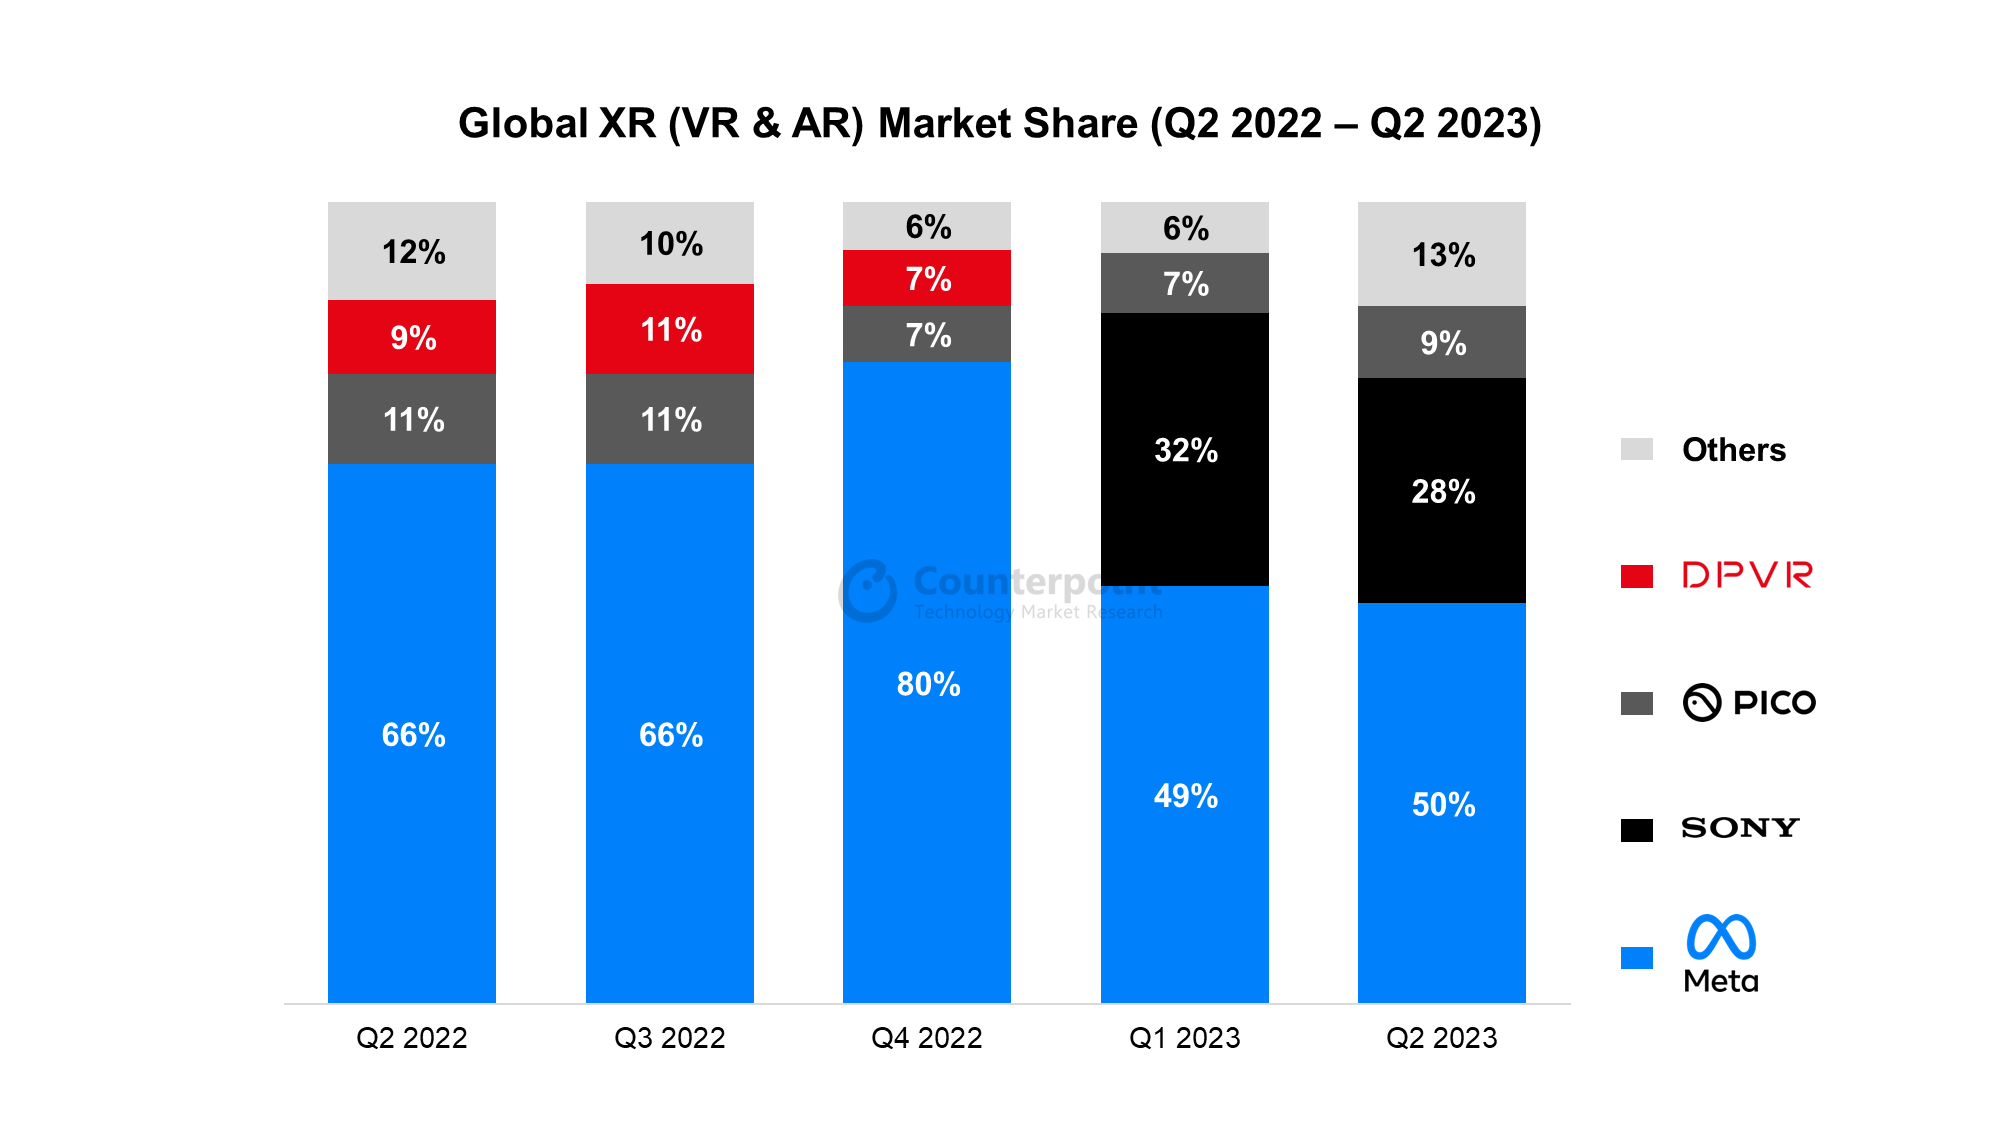 Global XR market share Q2 2023